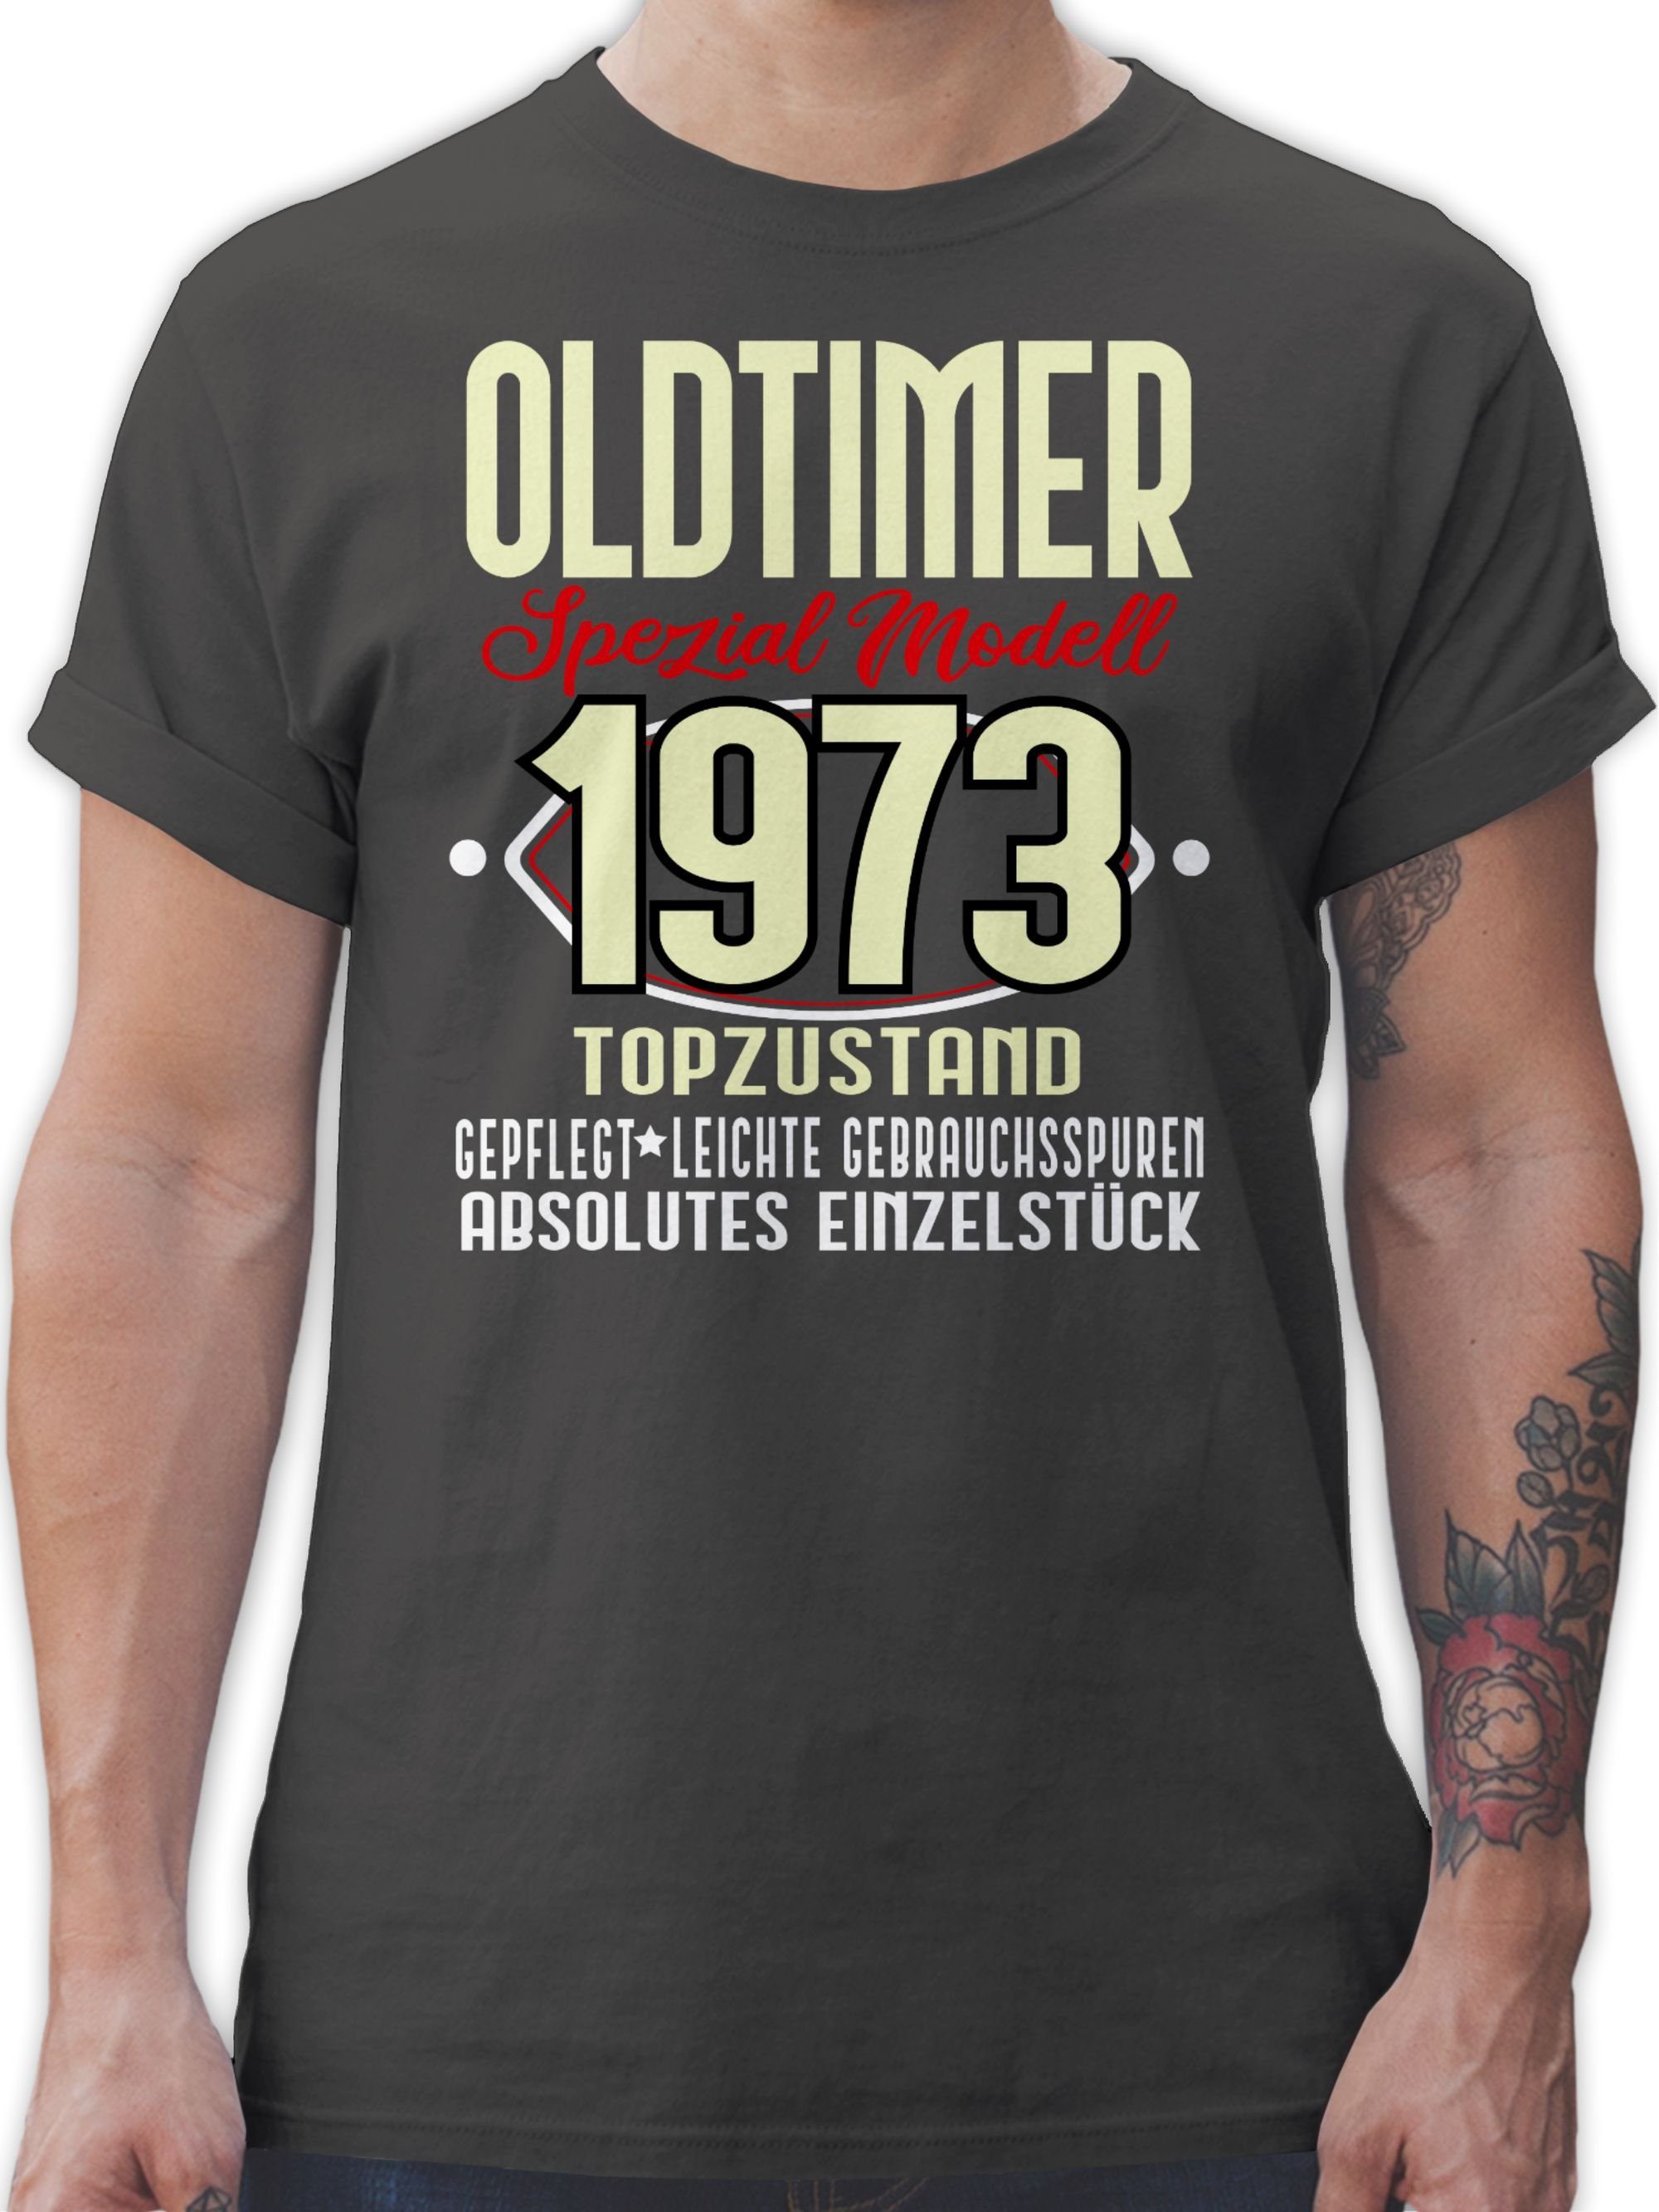 Shirtracer T-Shirt Oldtimer Spezial Modell 1973 Fünfzigster - 50. Geburtstag  - Herren Premium T-Shirt shirt 50. geburtstag mann - lustige geschenke 50er  - 50.geburtstag